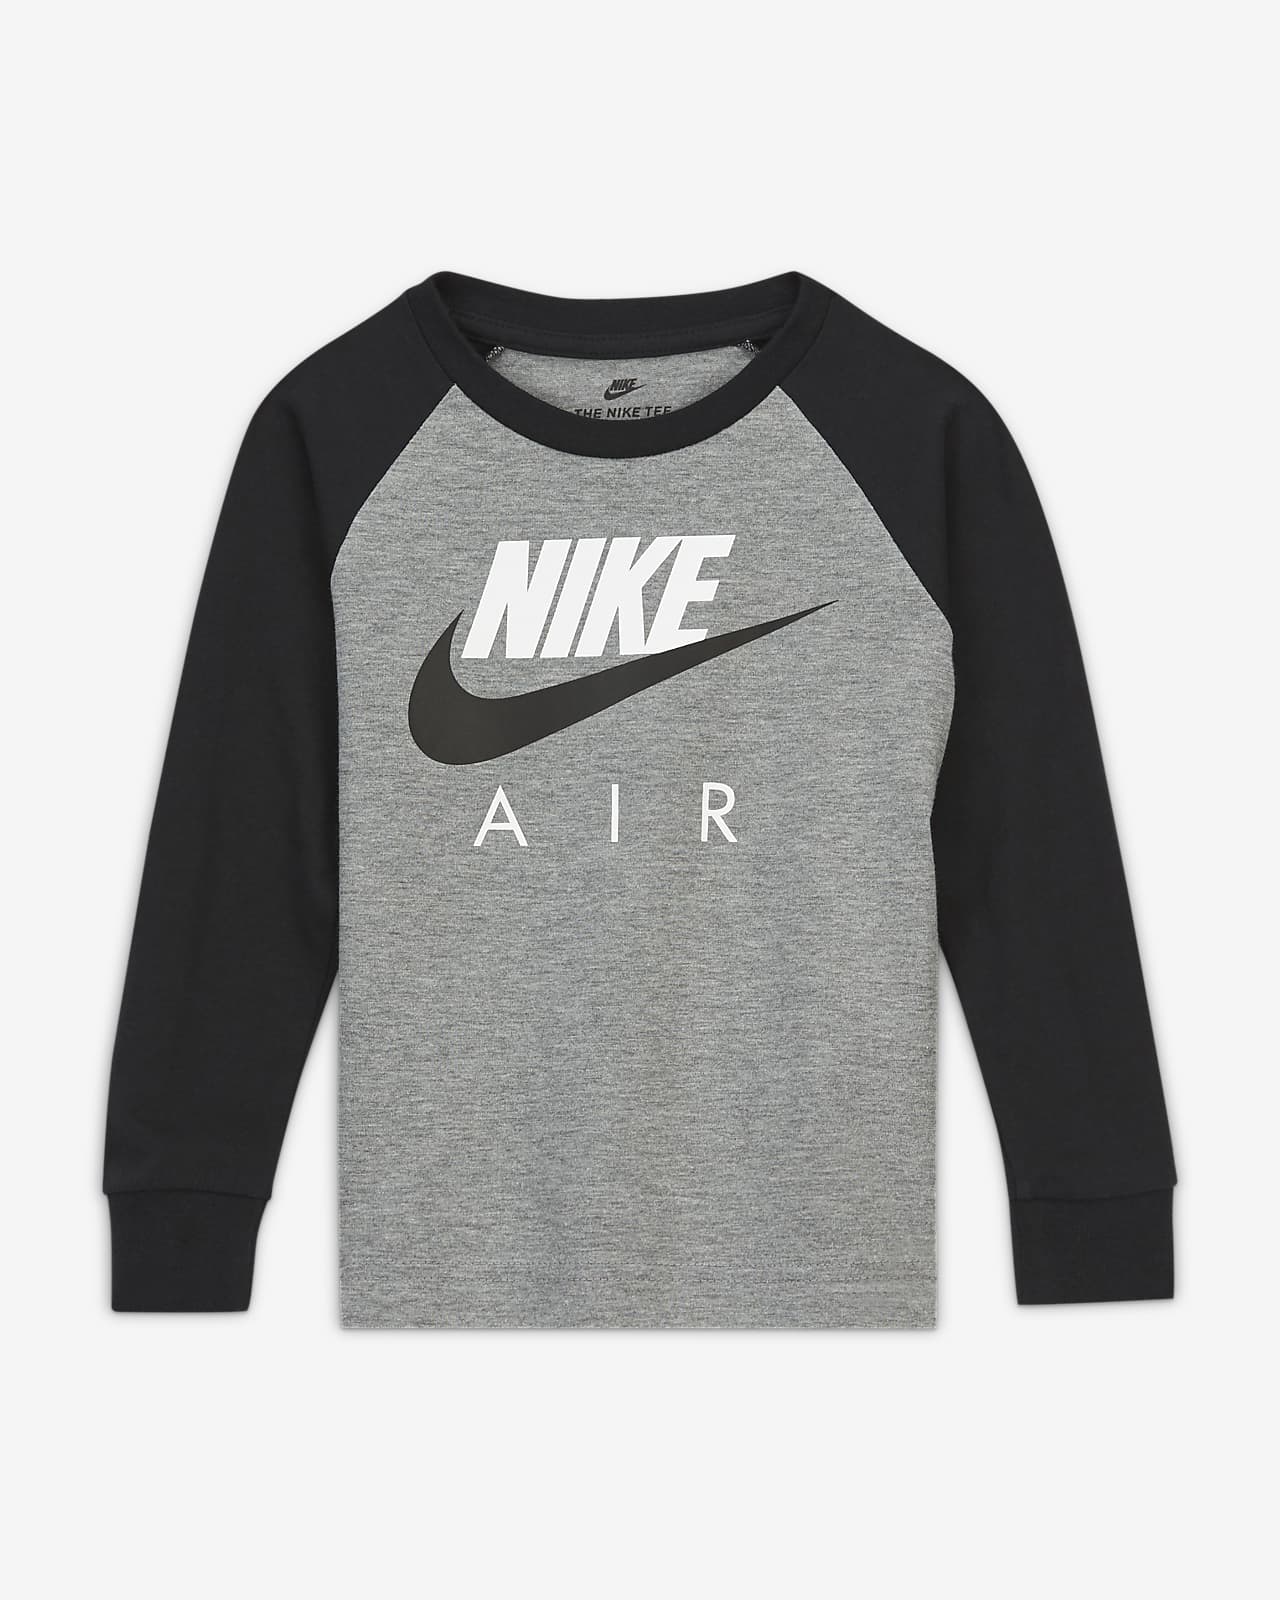 Nike Air Toddler Long-Sleeve T-Shirt.